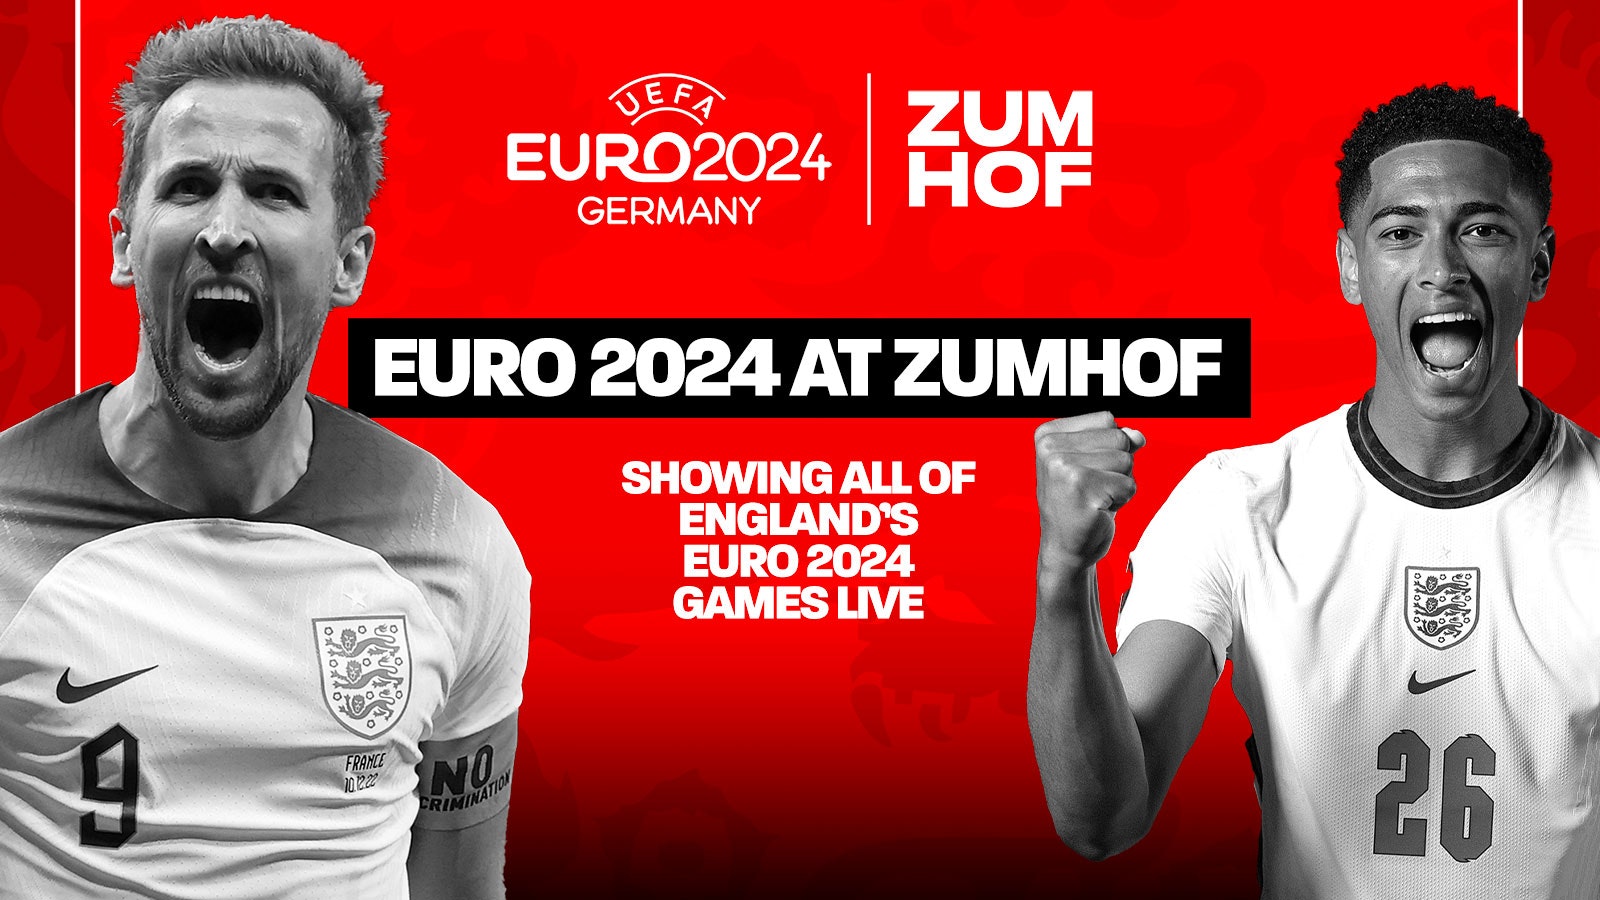 ENGLAND V DENMARK – EURO 2024 AT ZUMHOF